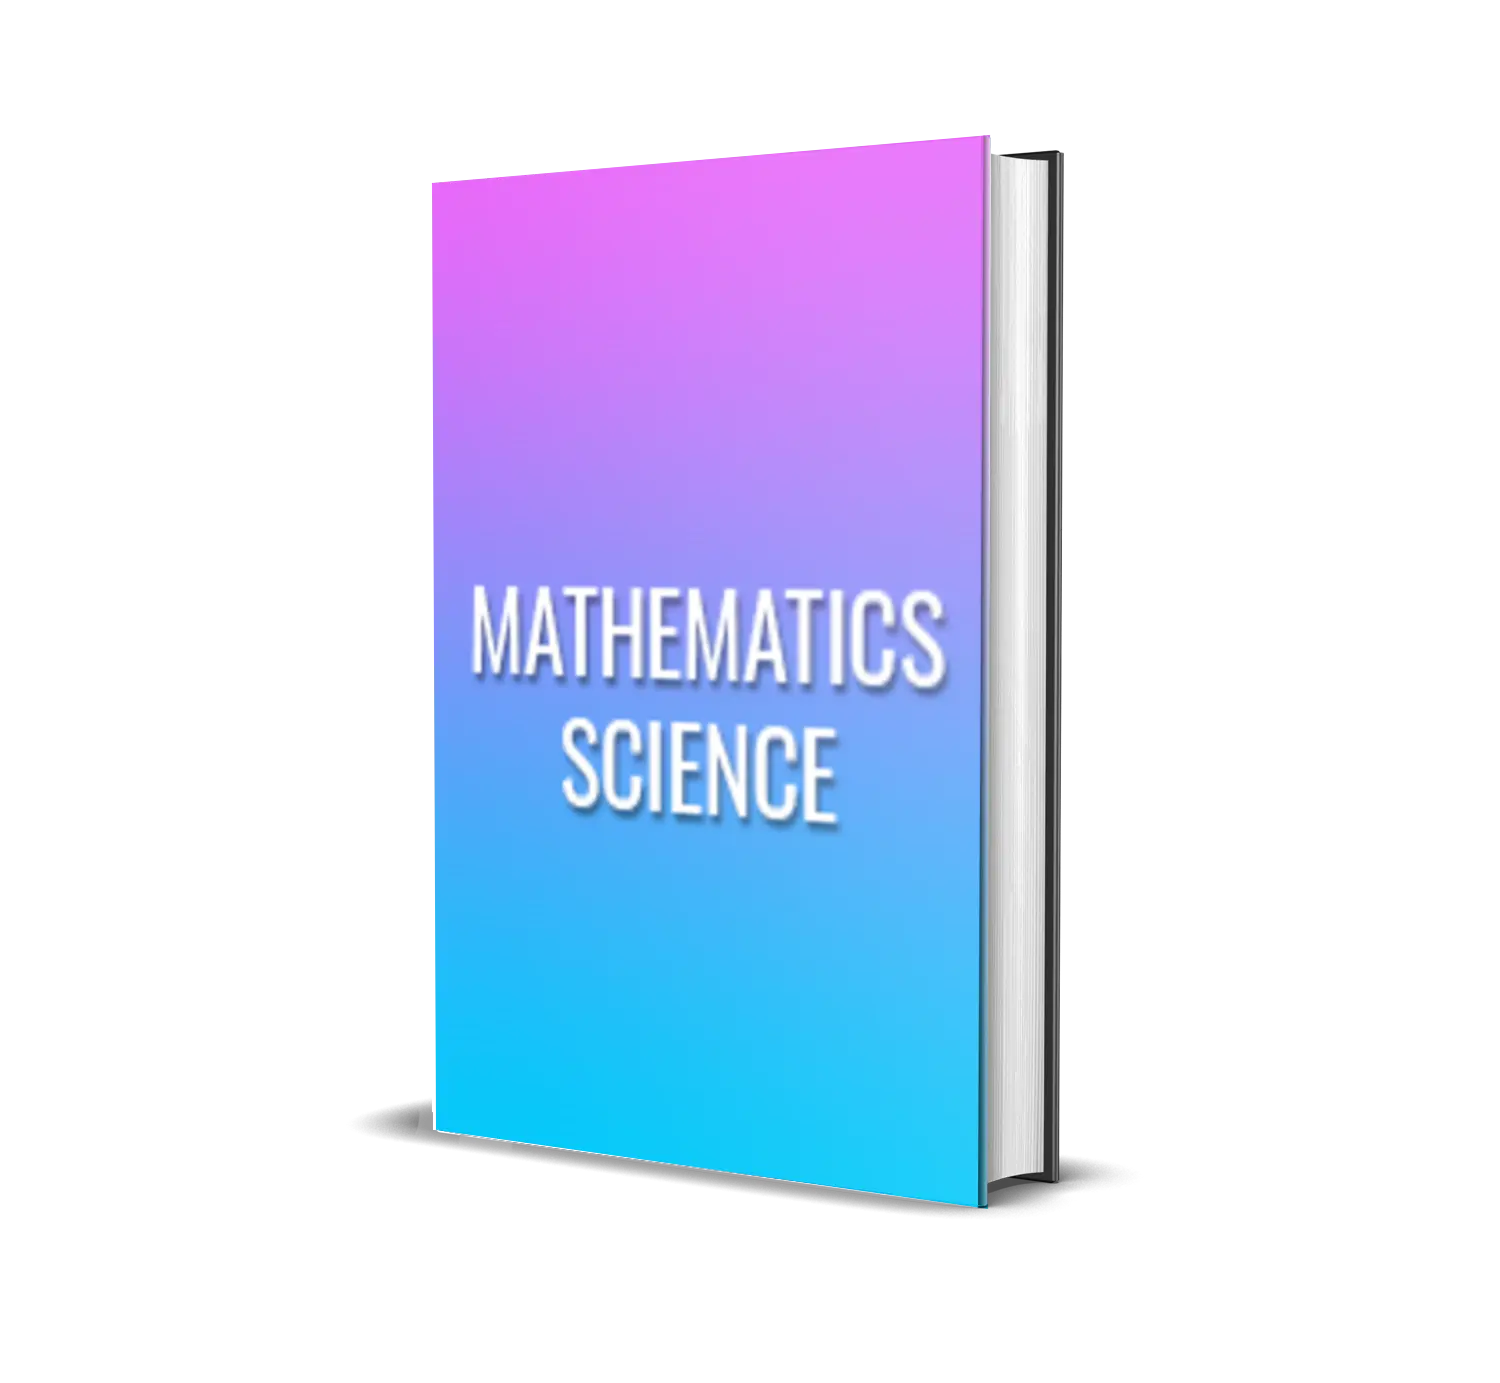 Mathematics science